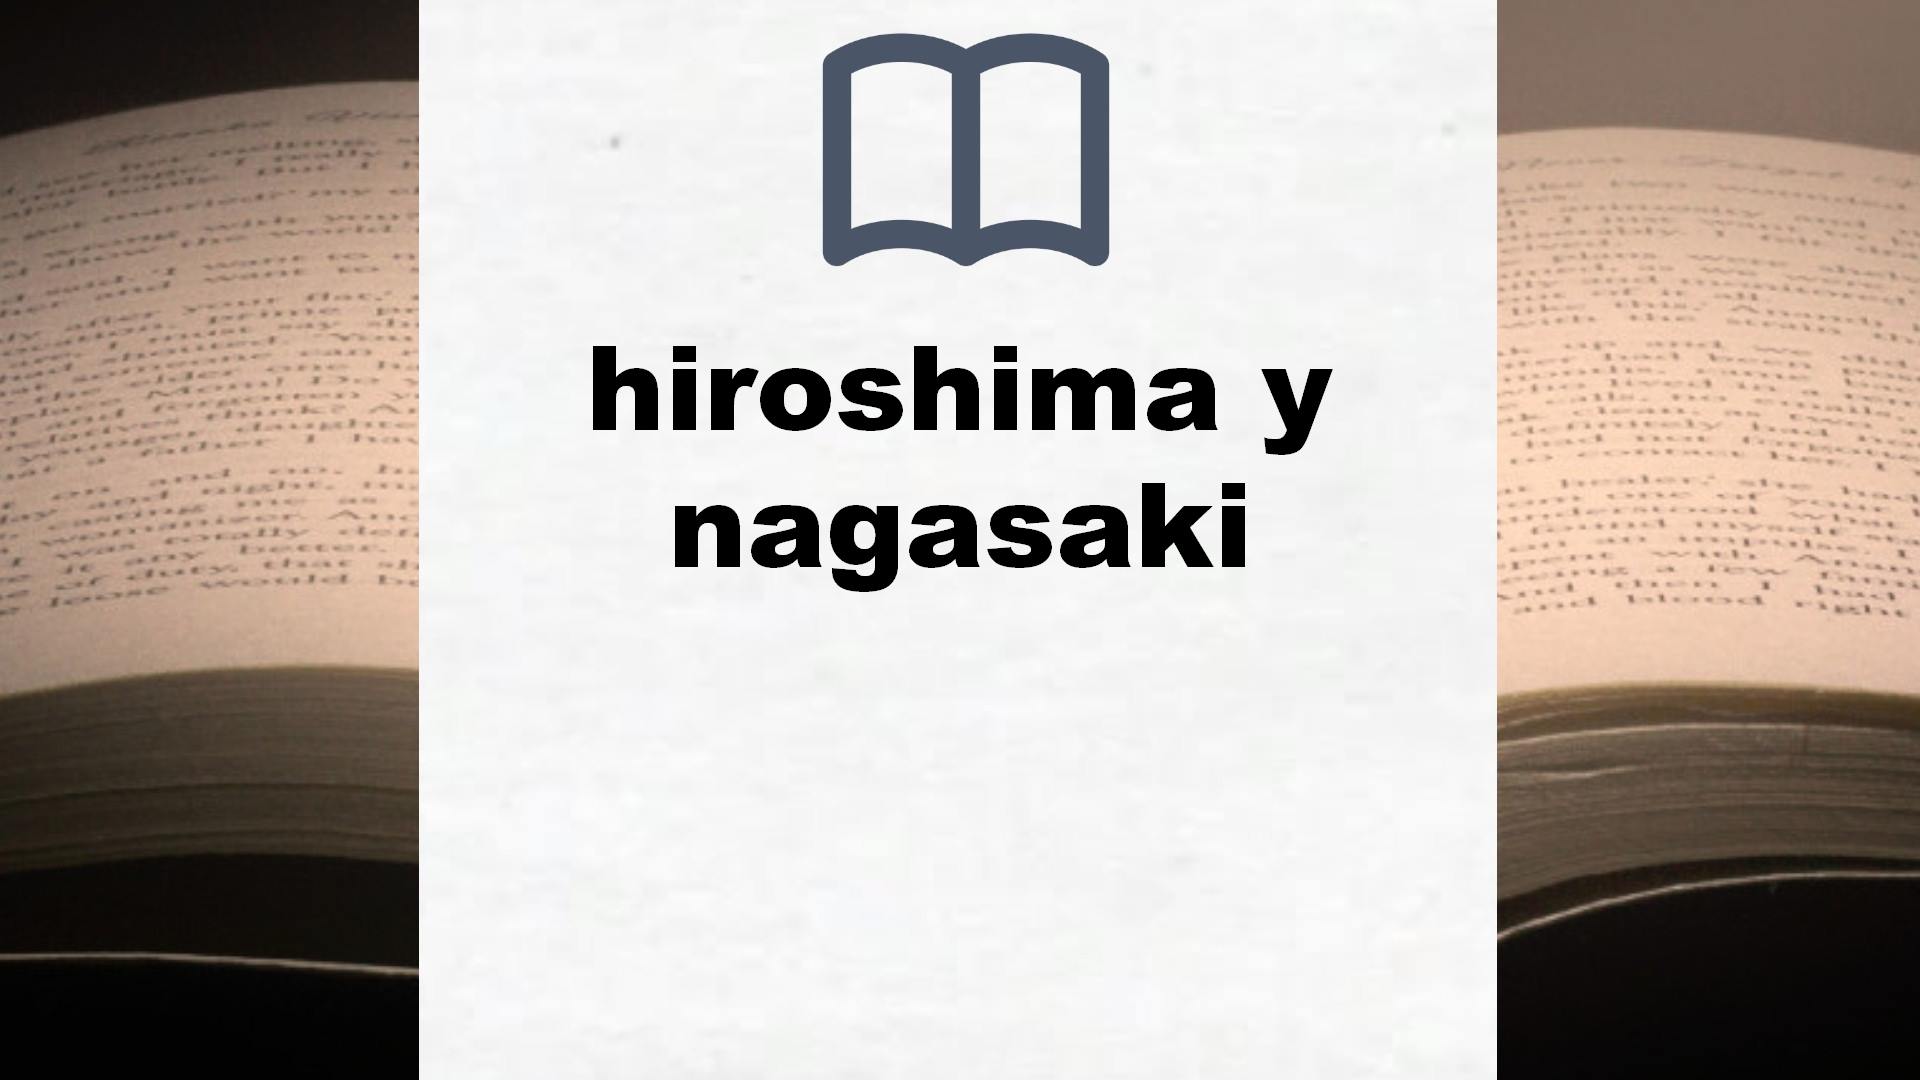 Libros sobre hiroshima y nagasaki